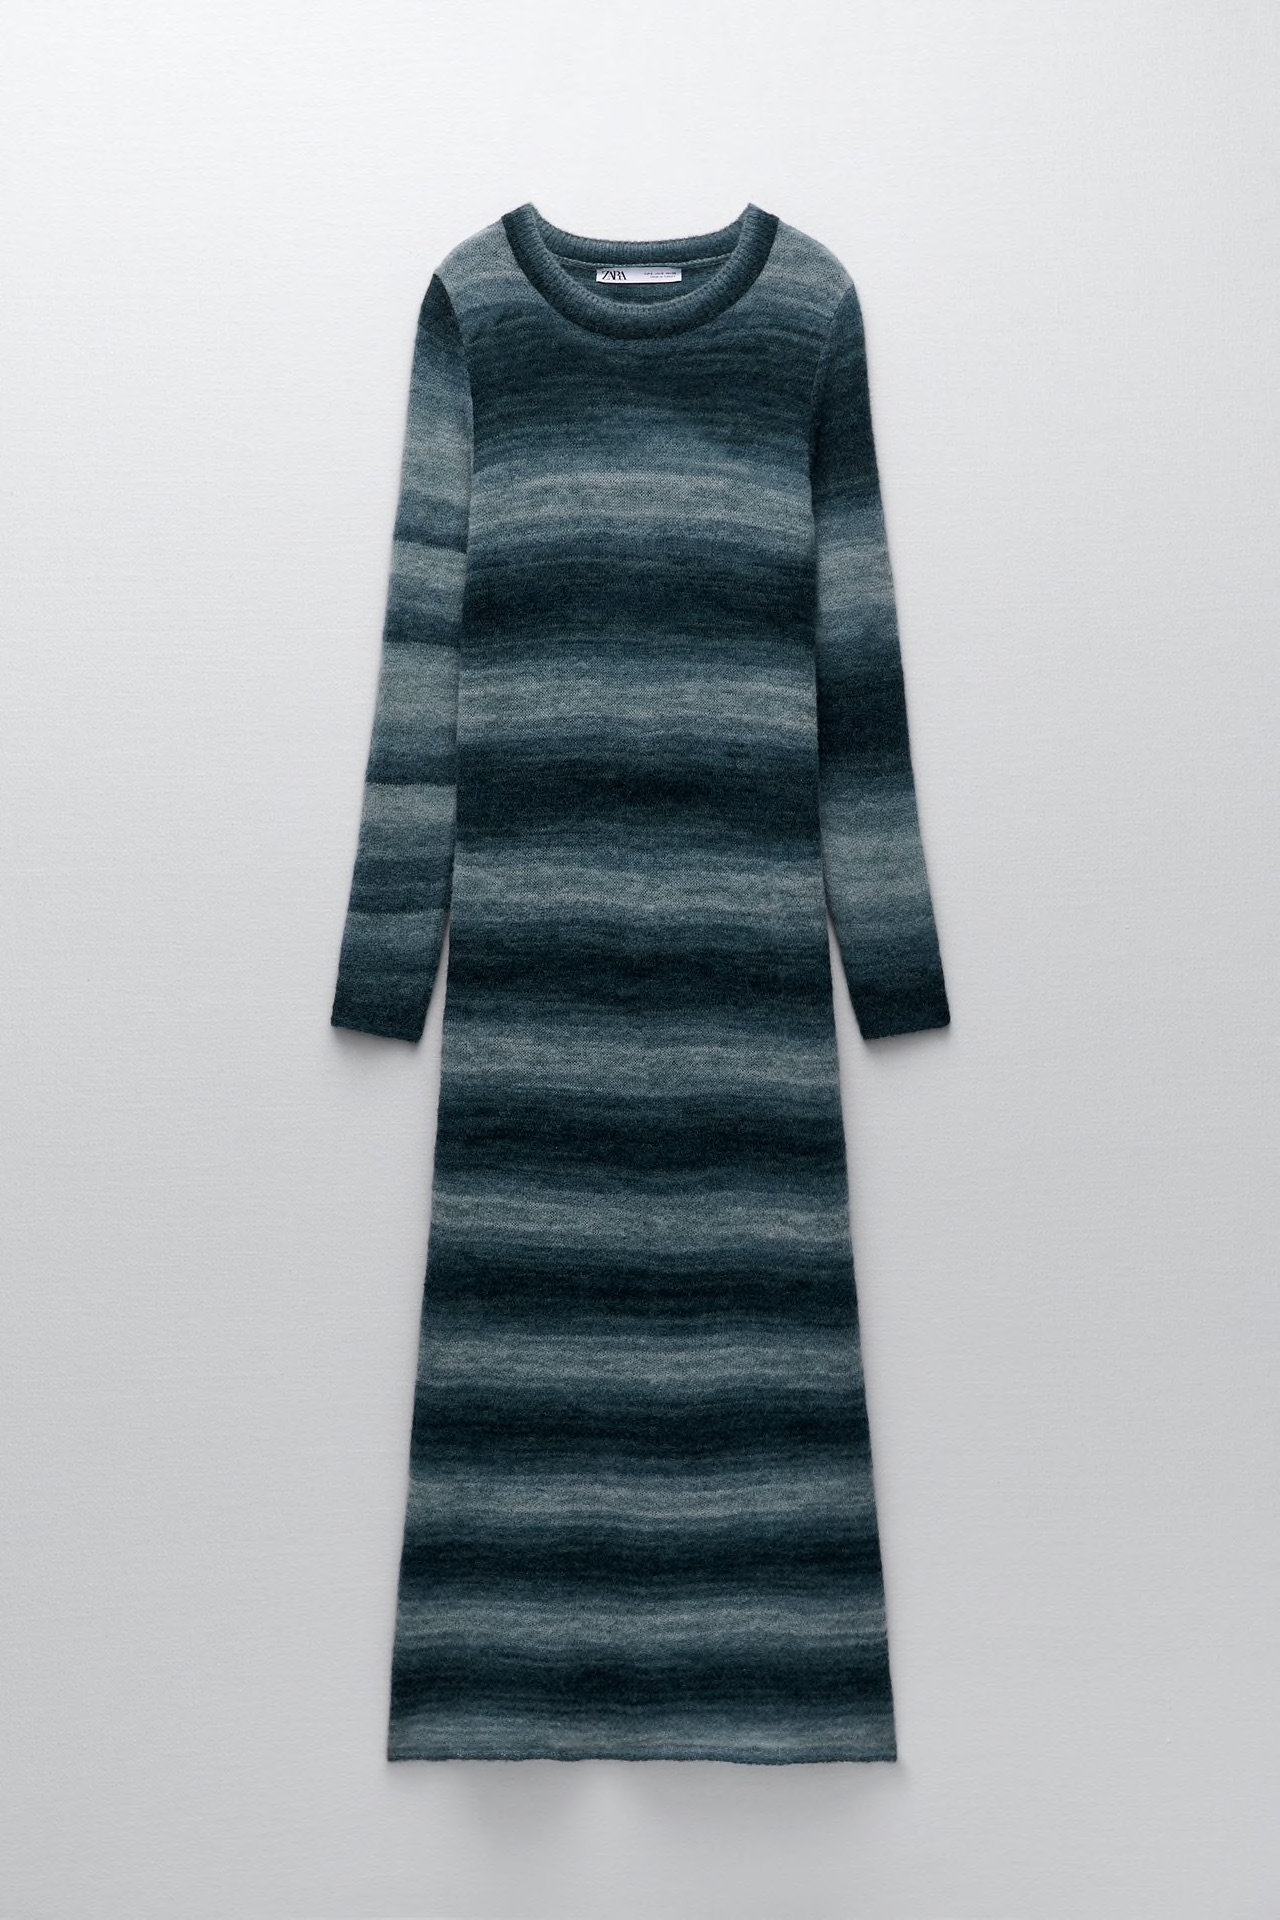 Zara Long Knit Striped Dress